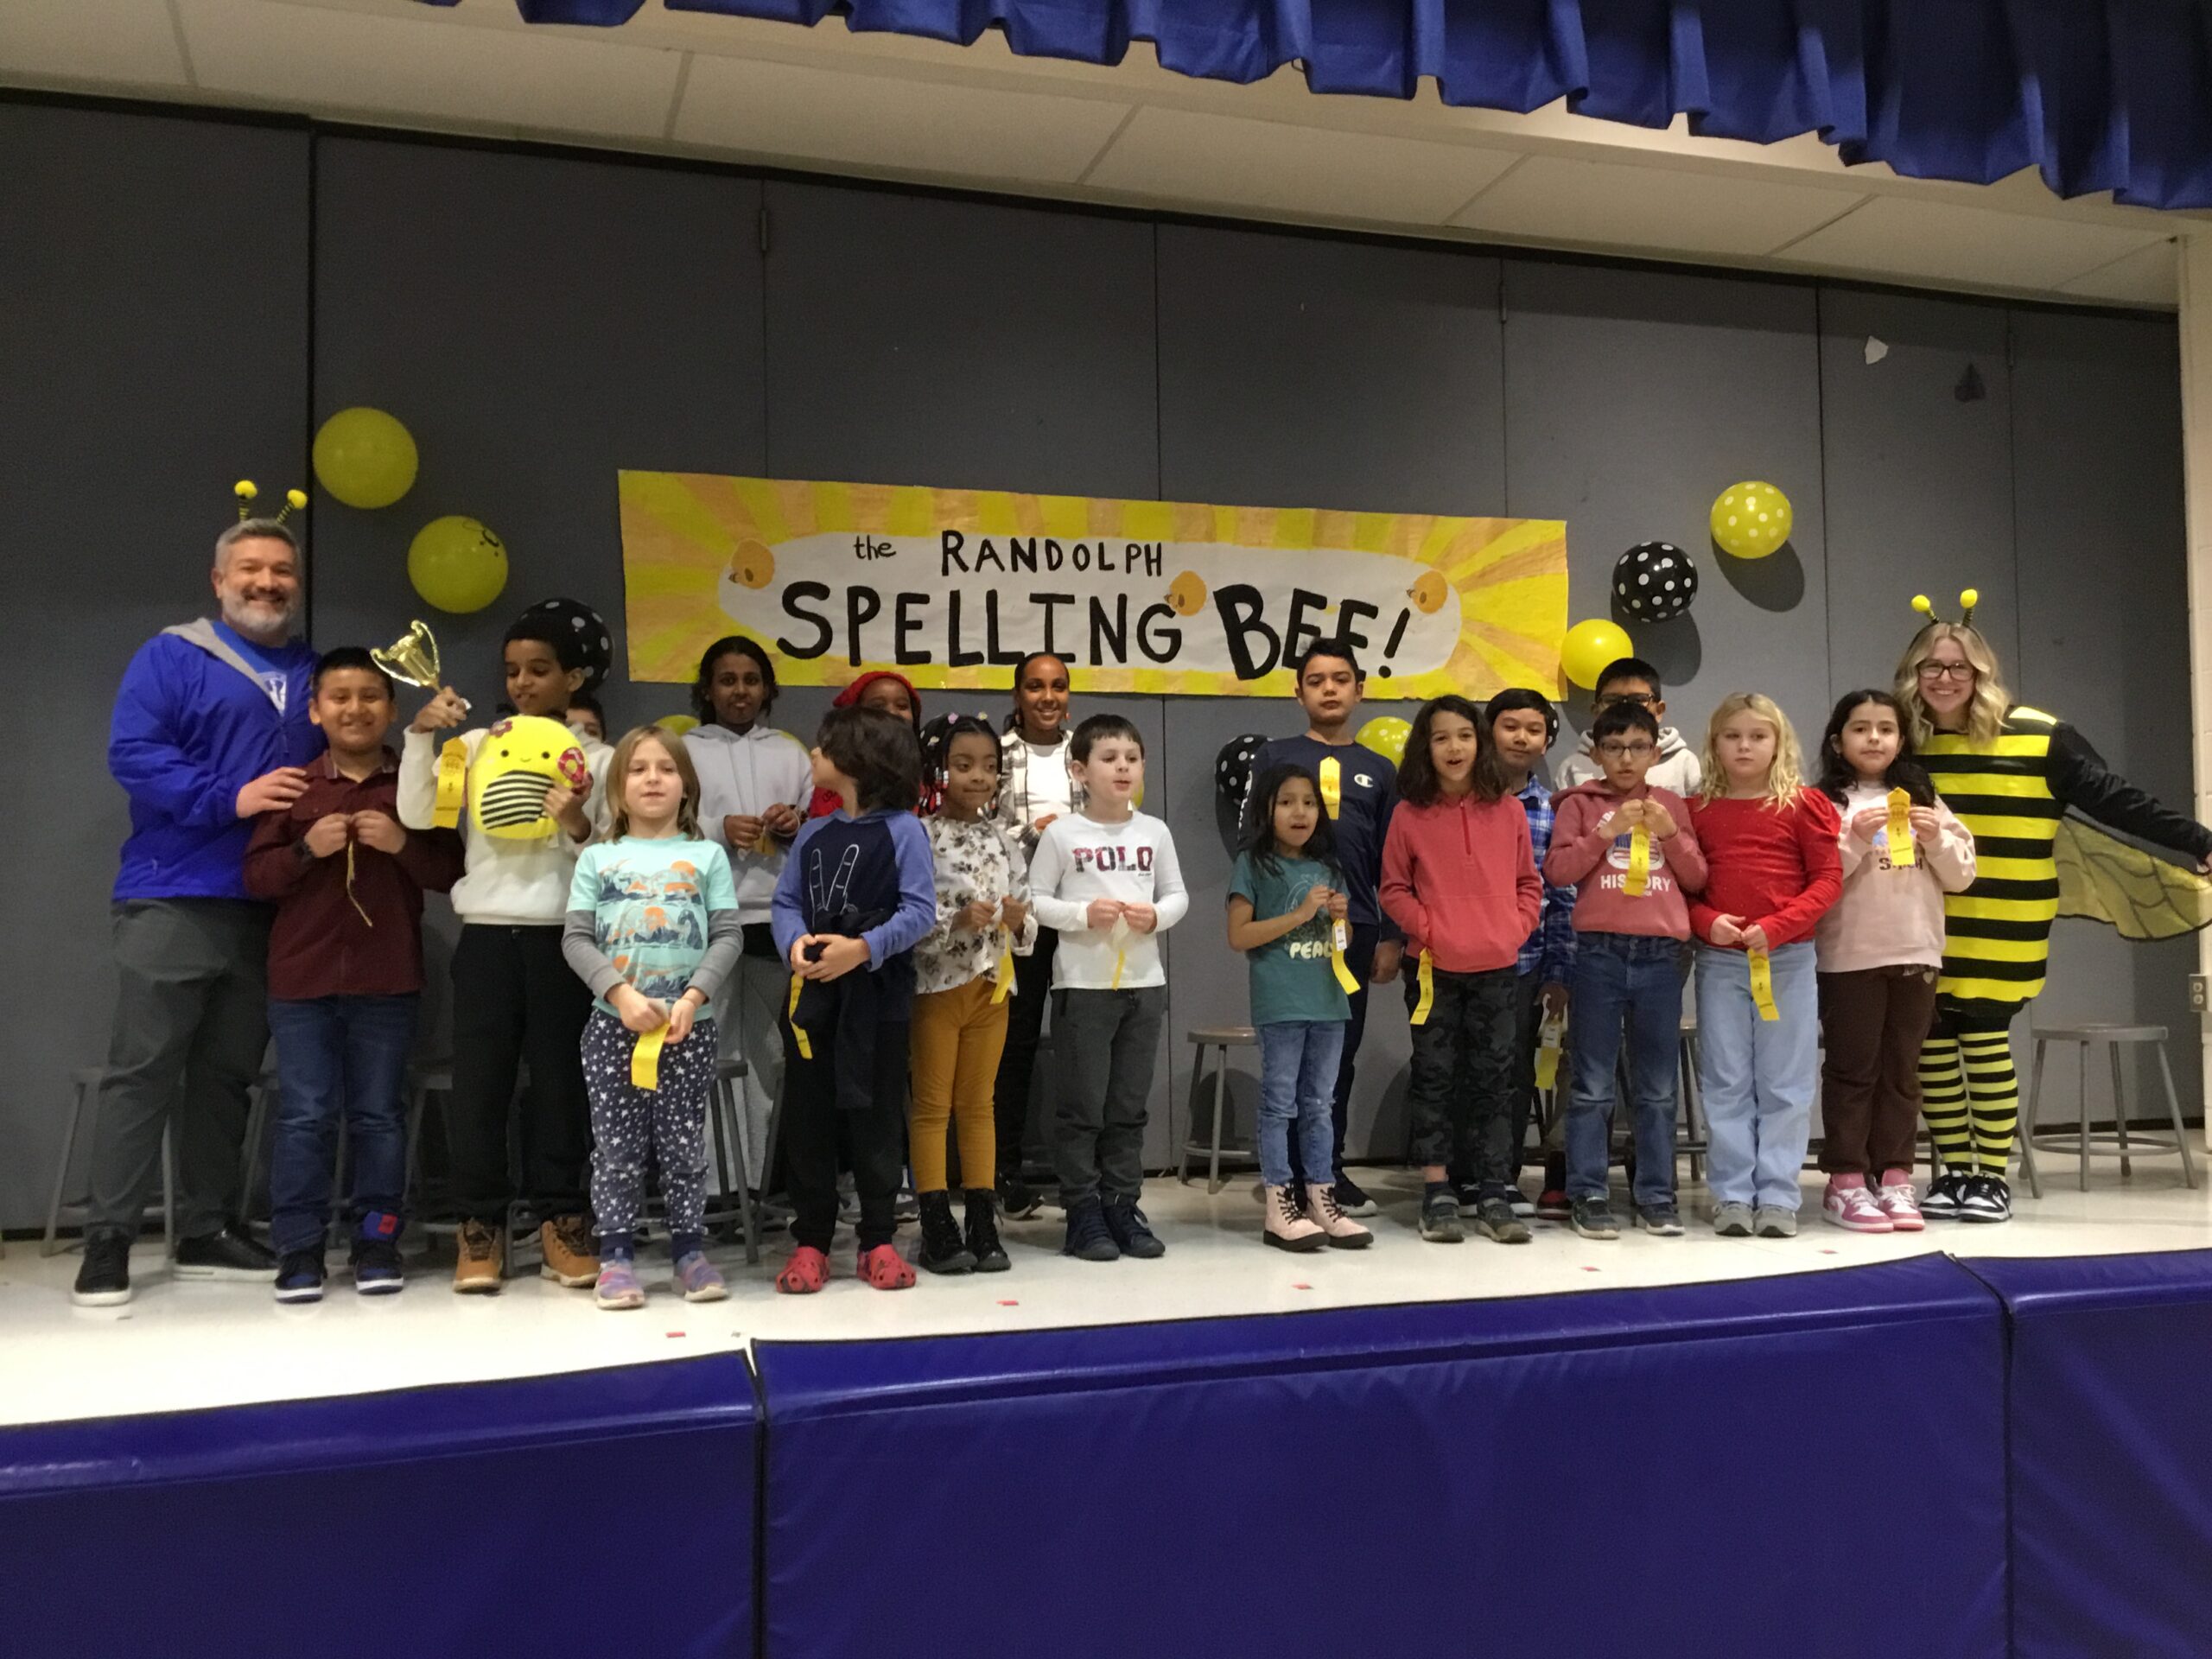 Randolph Spelling Bee participants